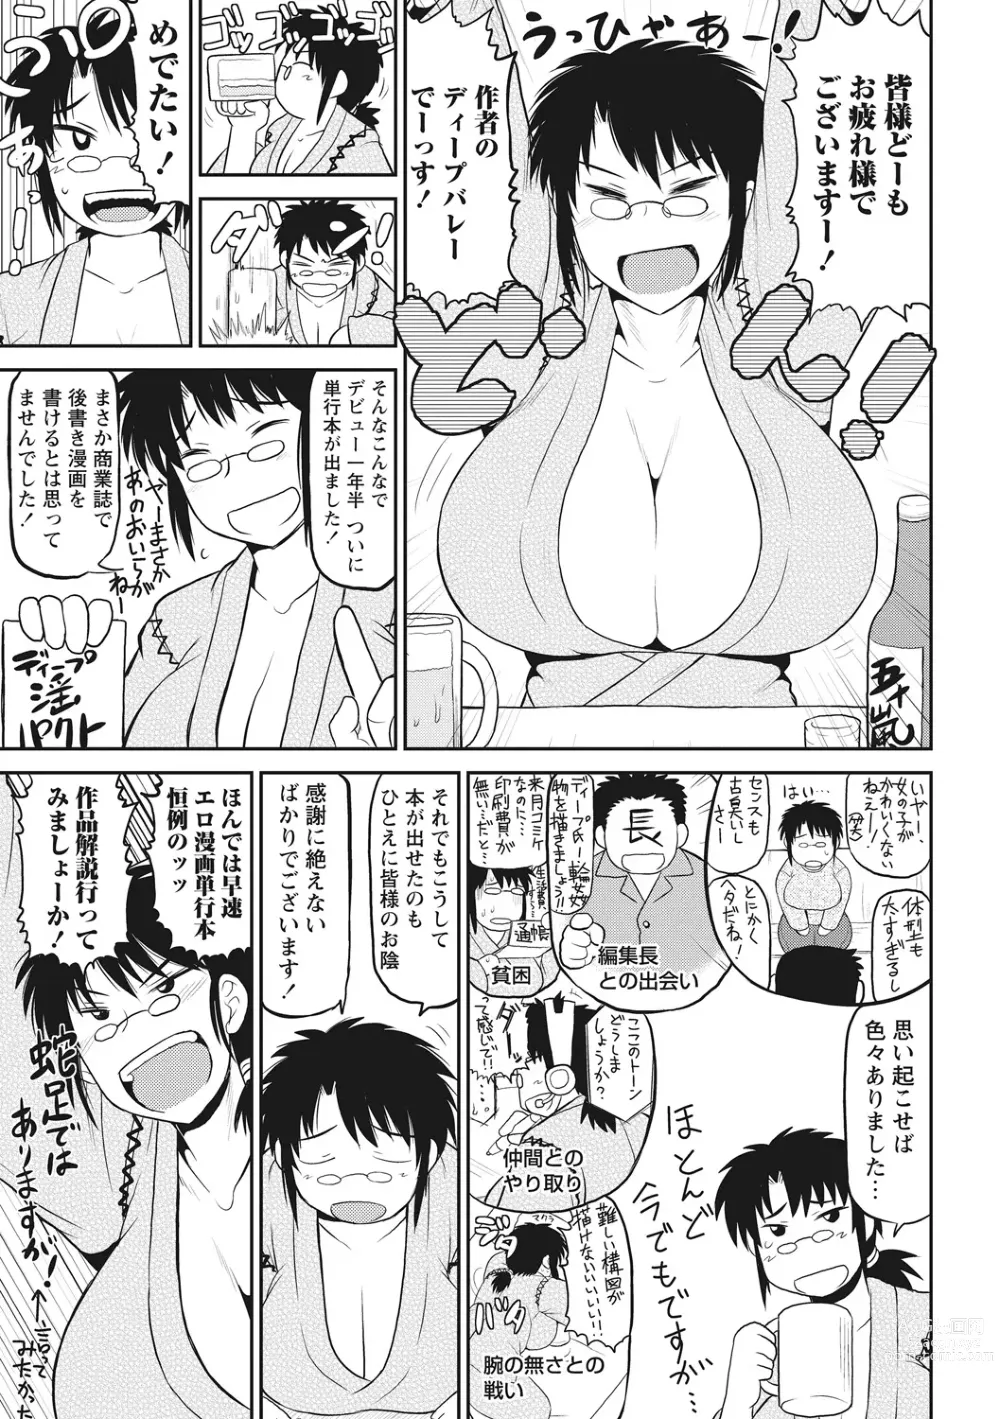 Page 194 of manga Deep Impact